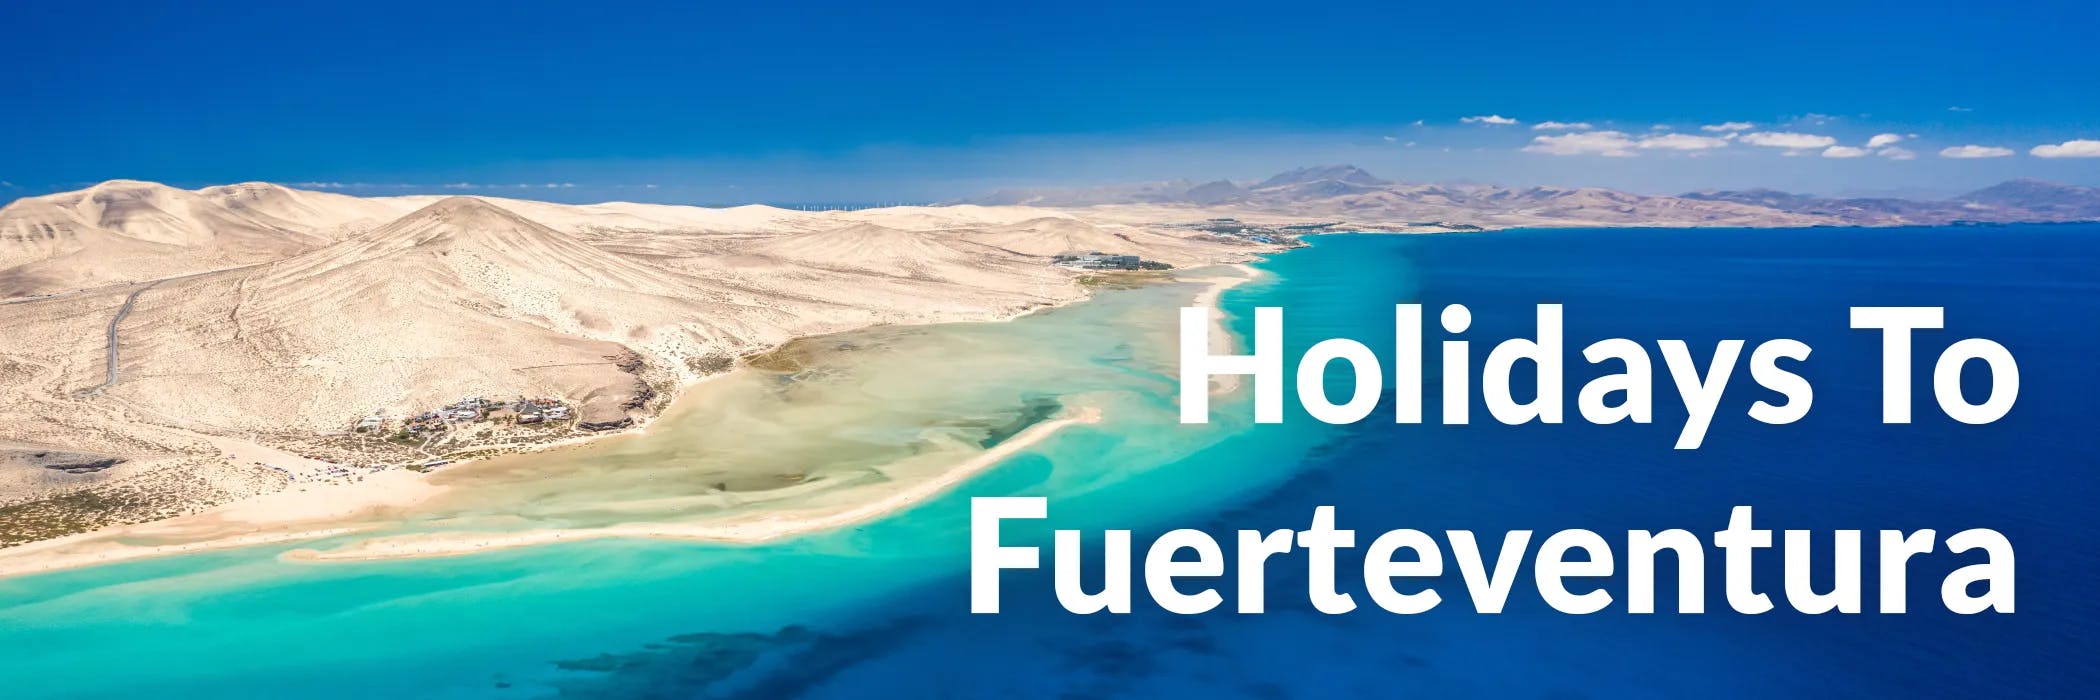 Fuerteventura Holidays - Beach